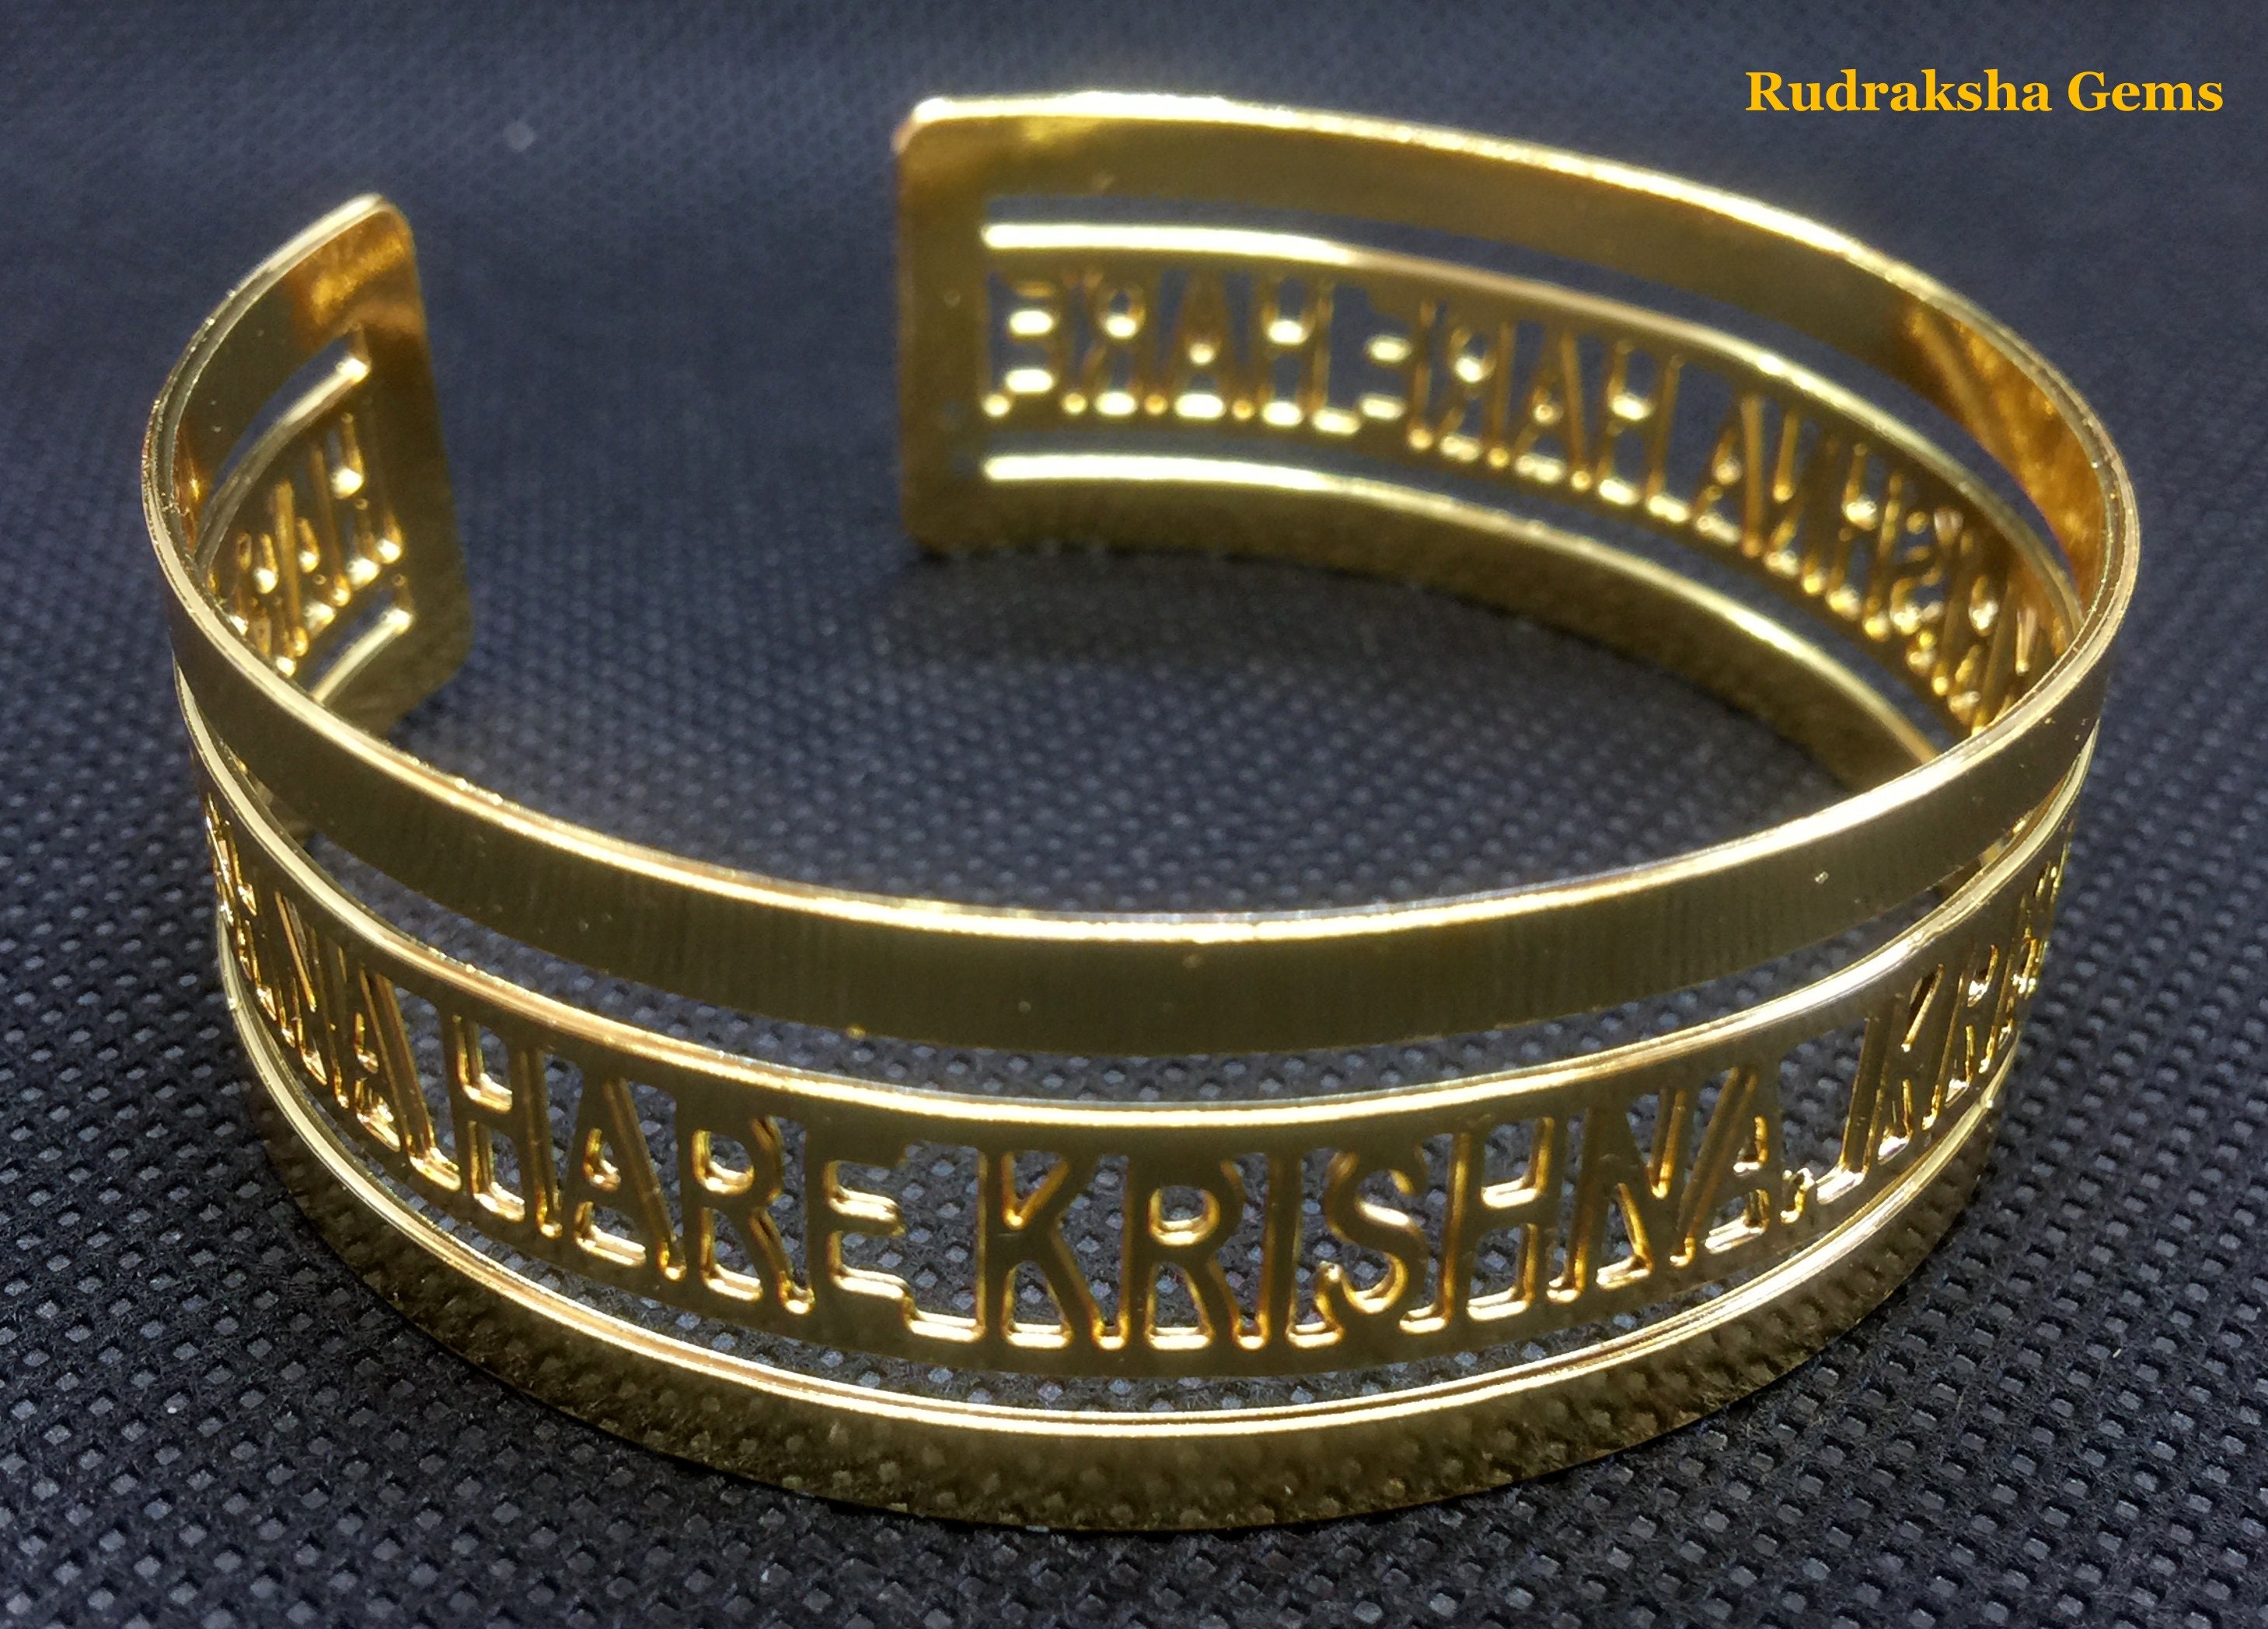 Krishna Jewels 92.5 Percent Pure Silver Bracelet at Rs 2600/piece in Jaipur